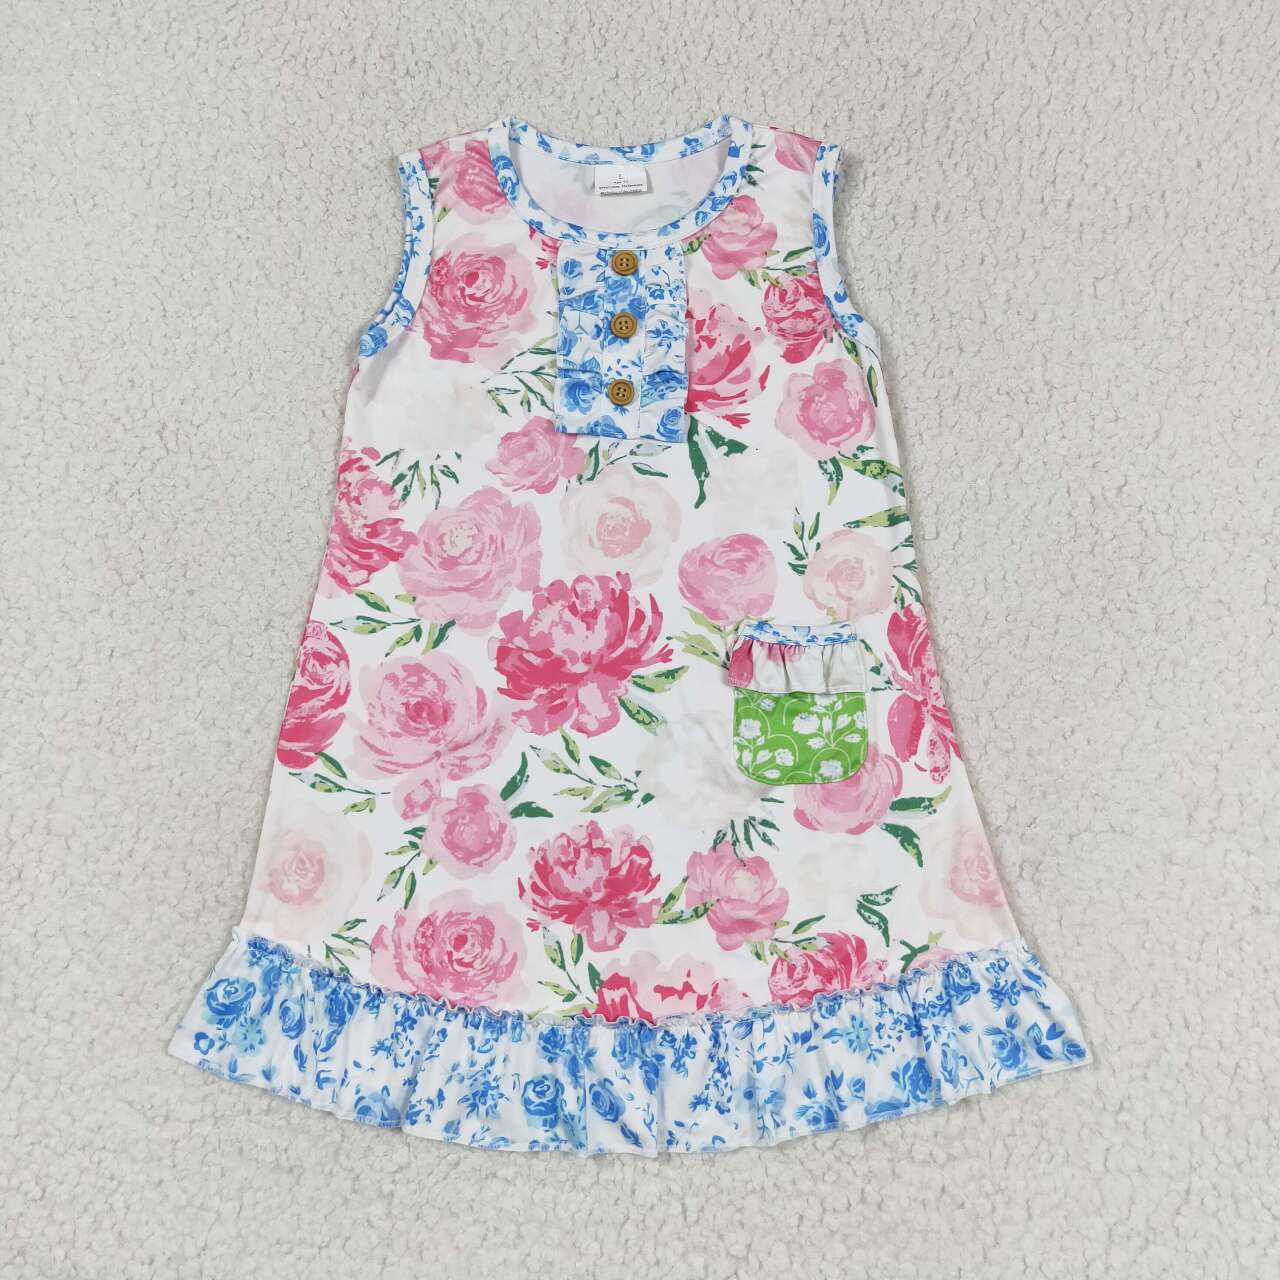 GSD1154 Baby girl summer clothes sleeveless top kids dress